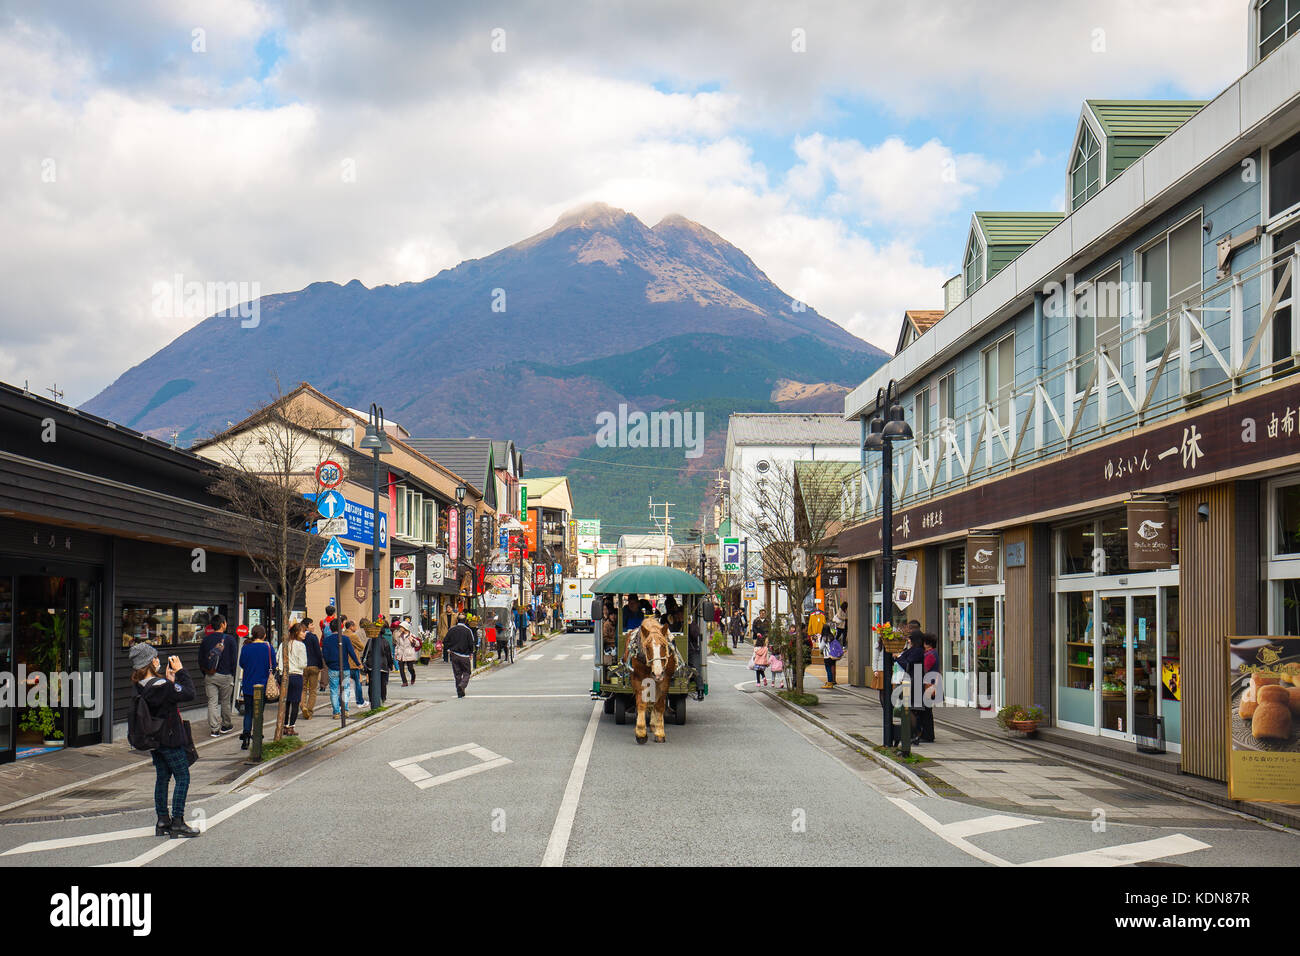 Oita, Japan - November 29, 2014: Yufuin Onsen town with Mount Yufu in Background at Oita, Japan. Stock Photo